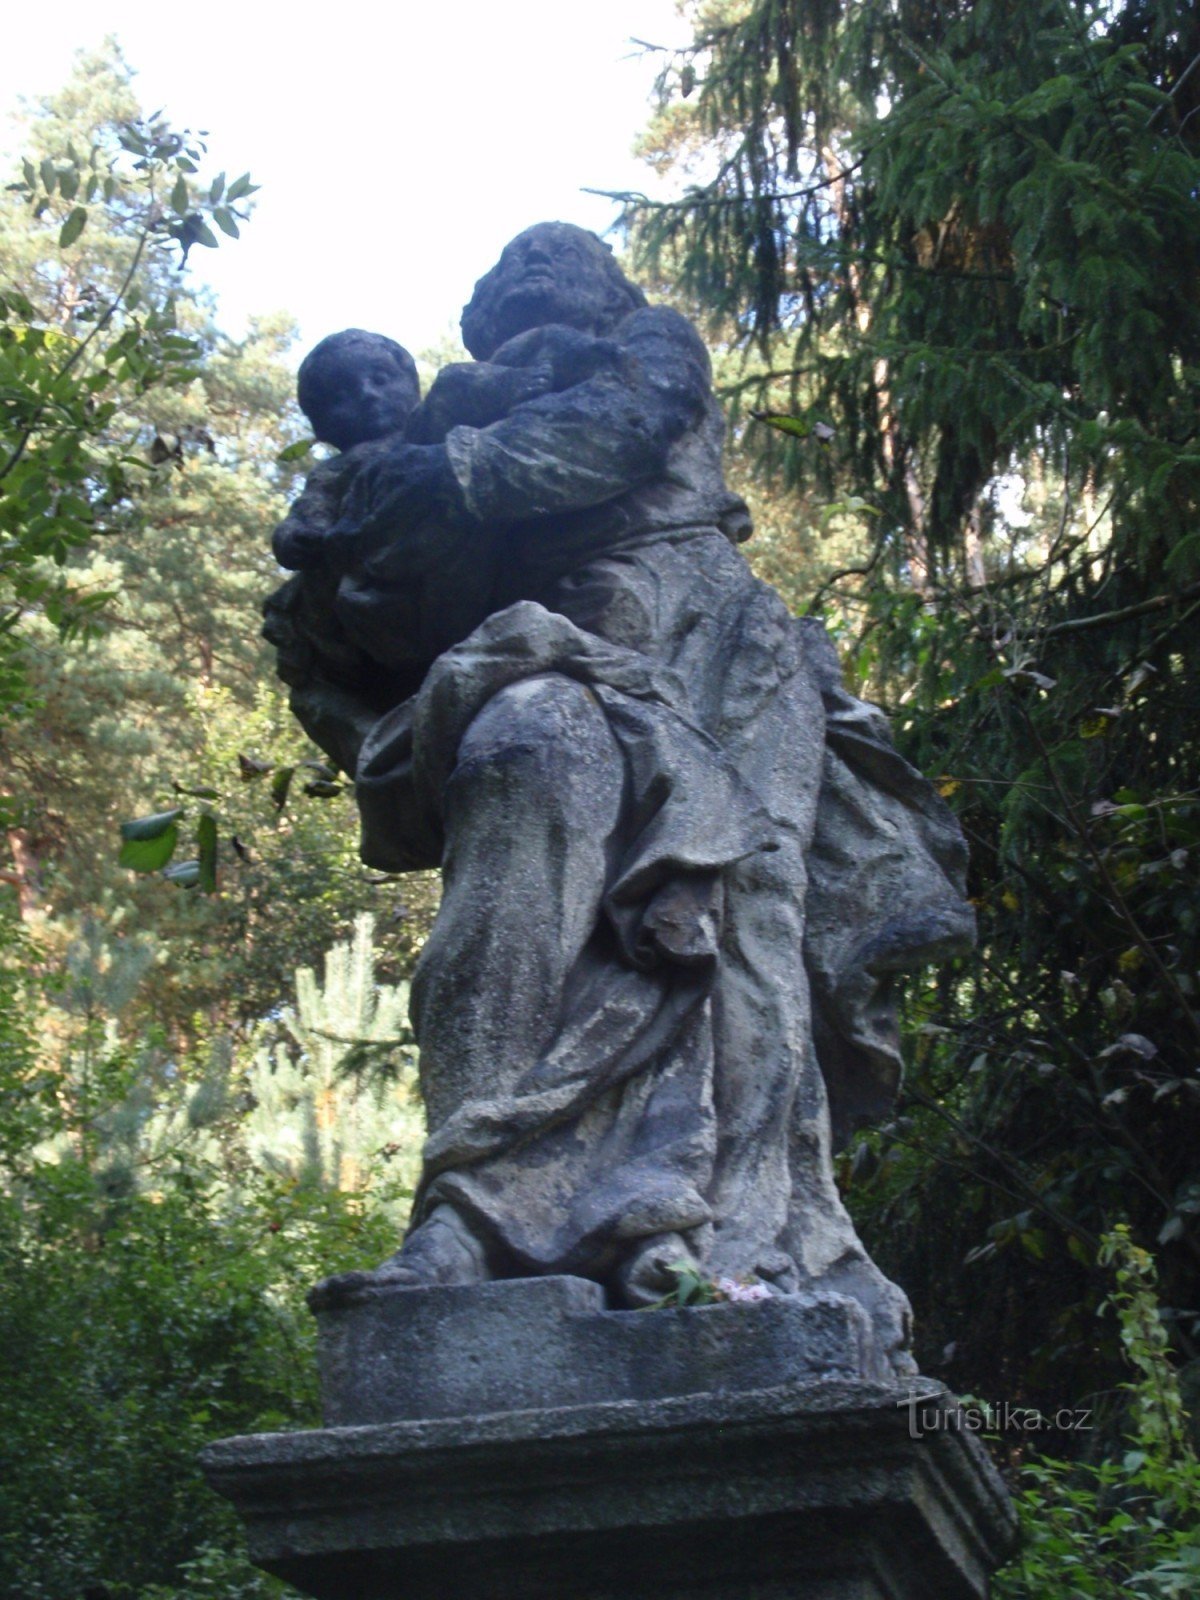 Statue of St. Joseph with Baby Jesus near Tasov